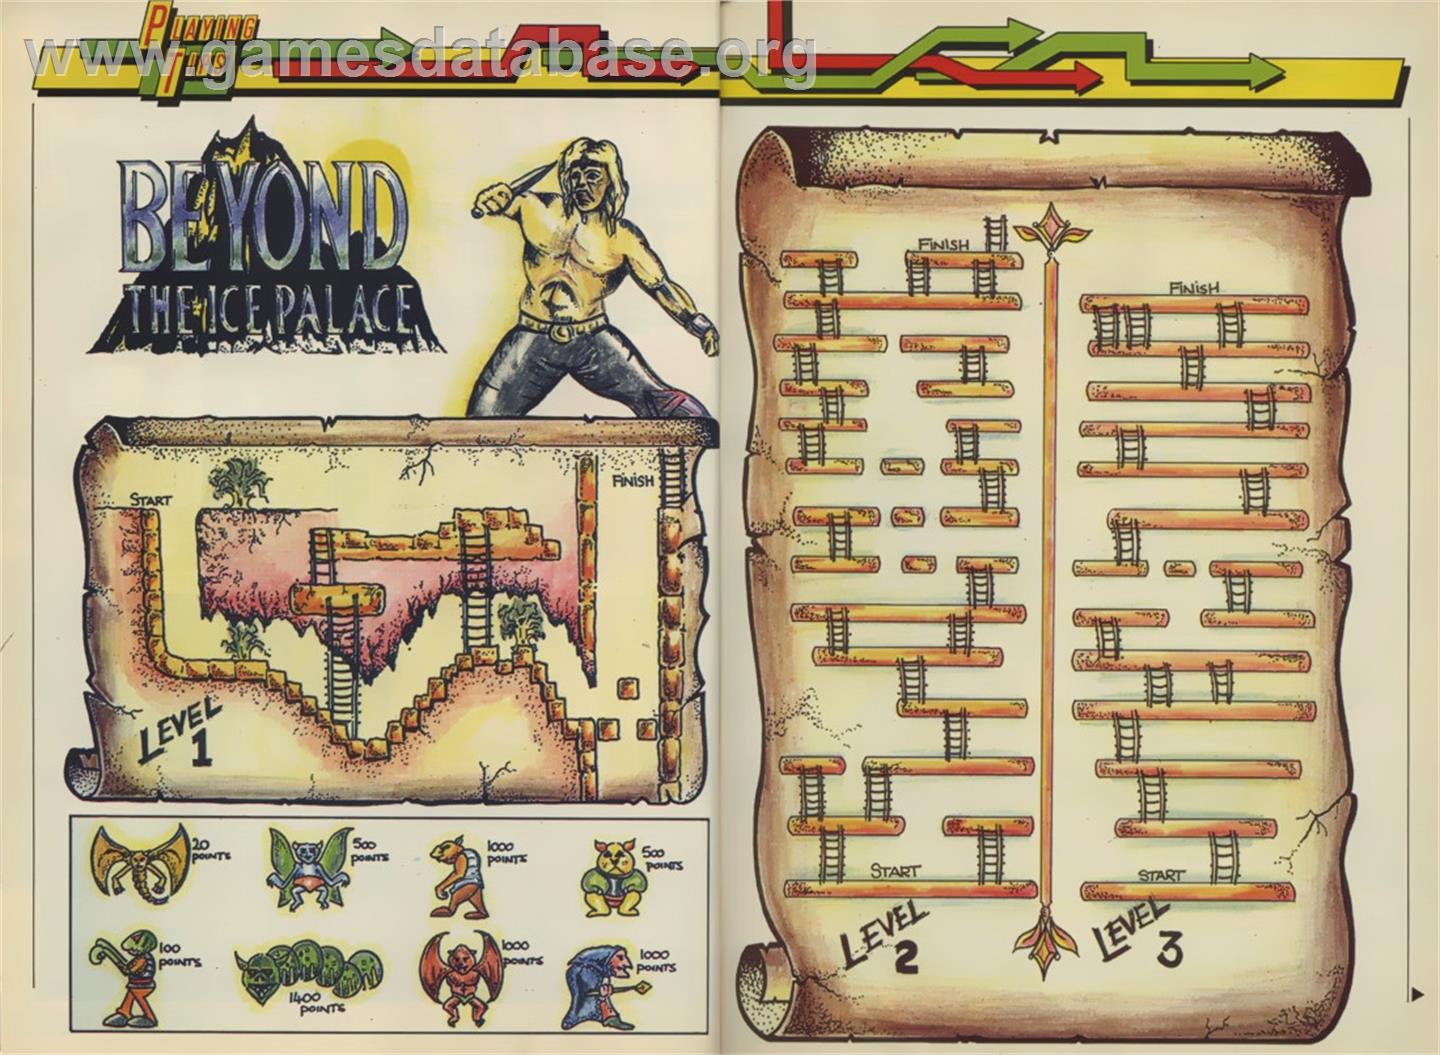 Beyond the Ice Palace - Commodore Amiga - Artwork - Map